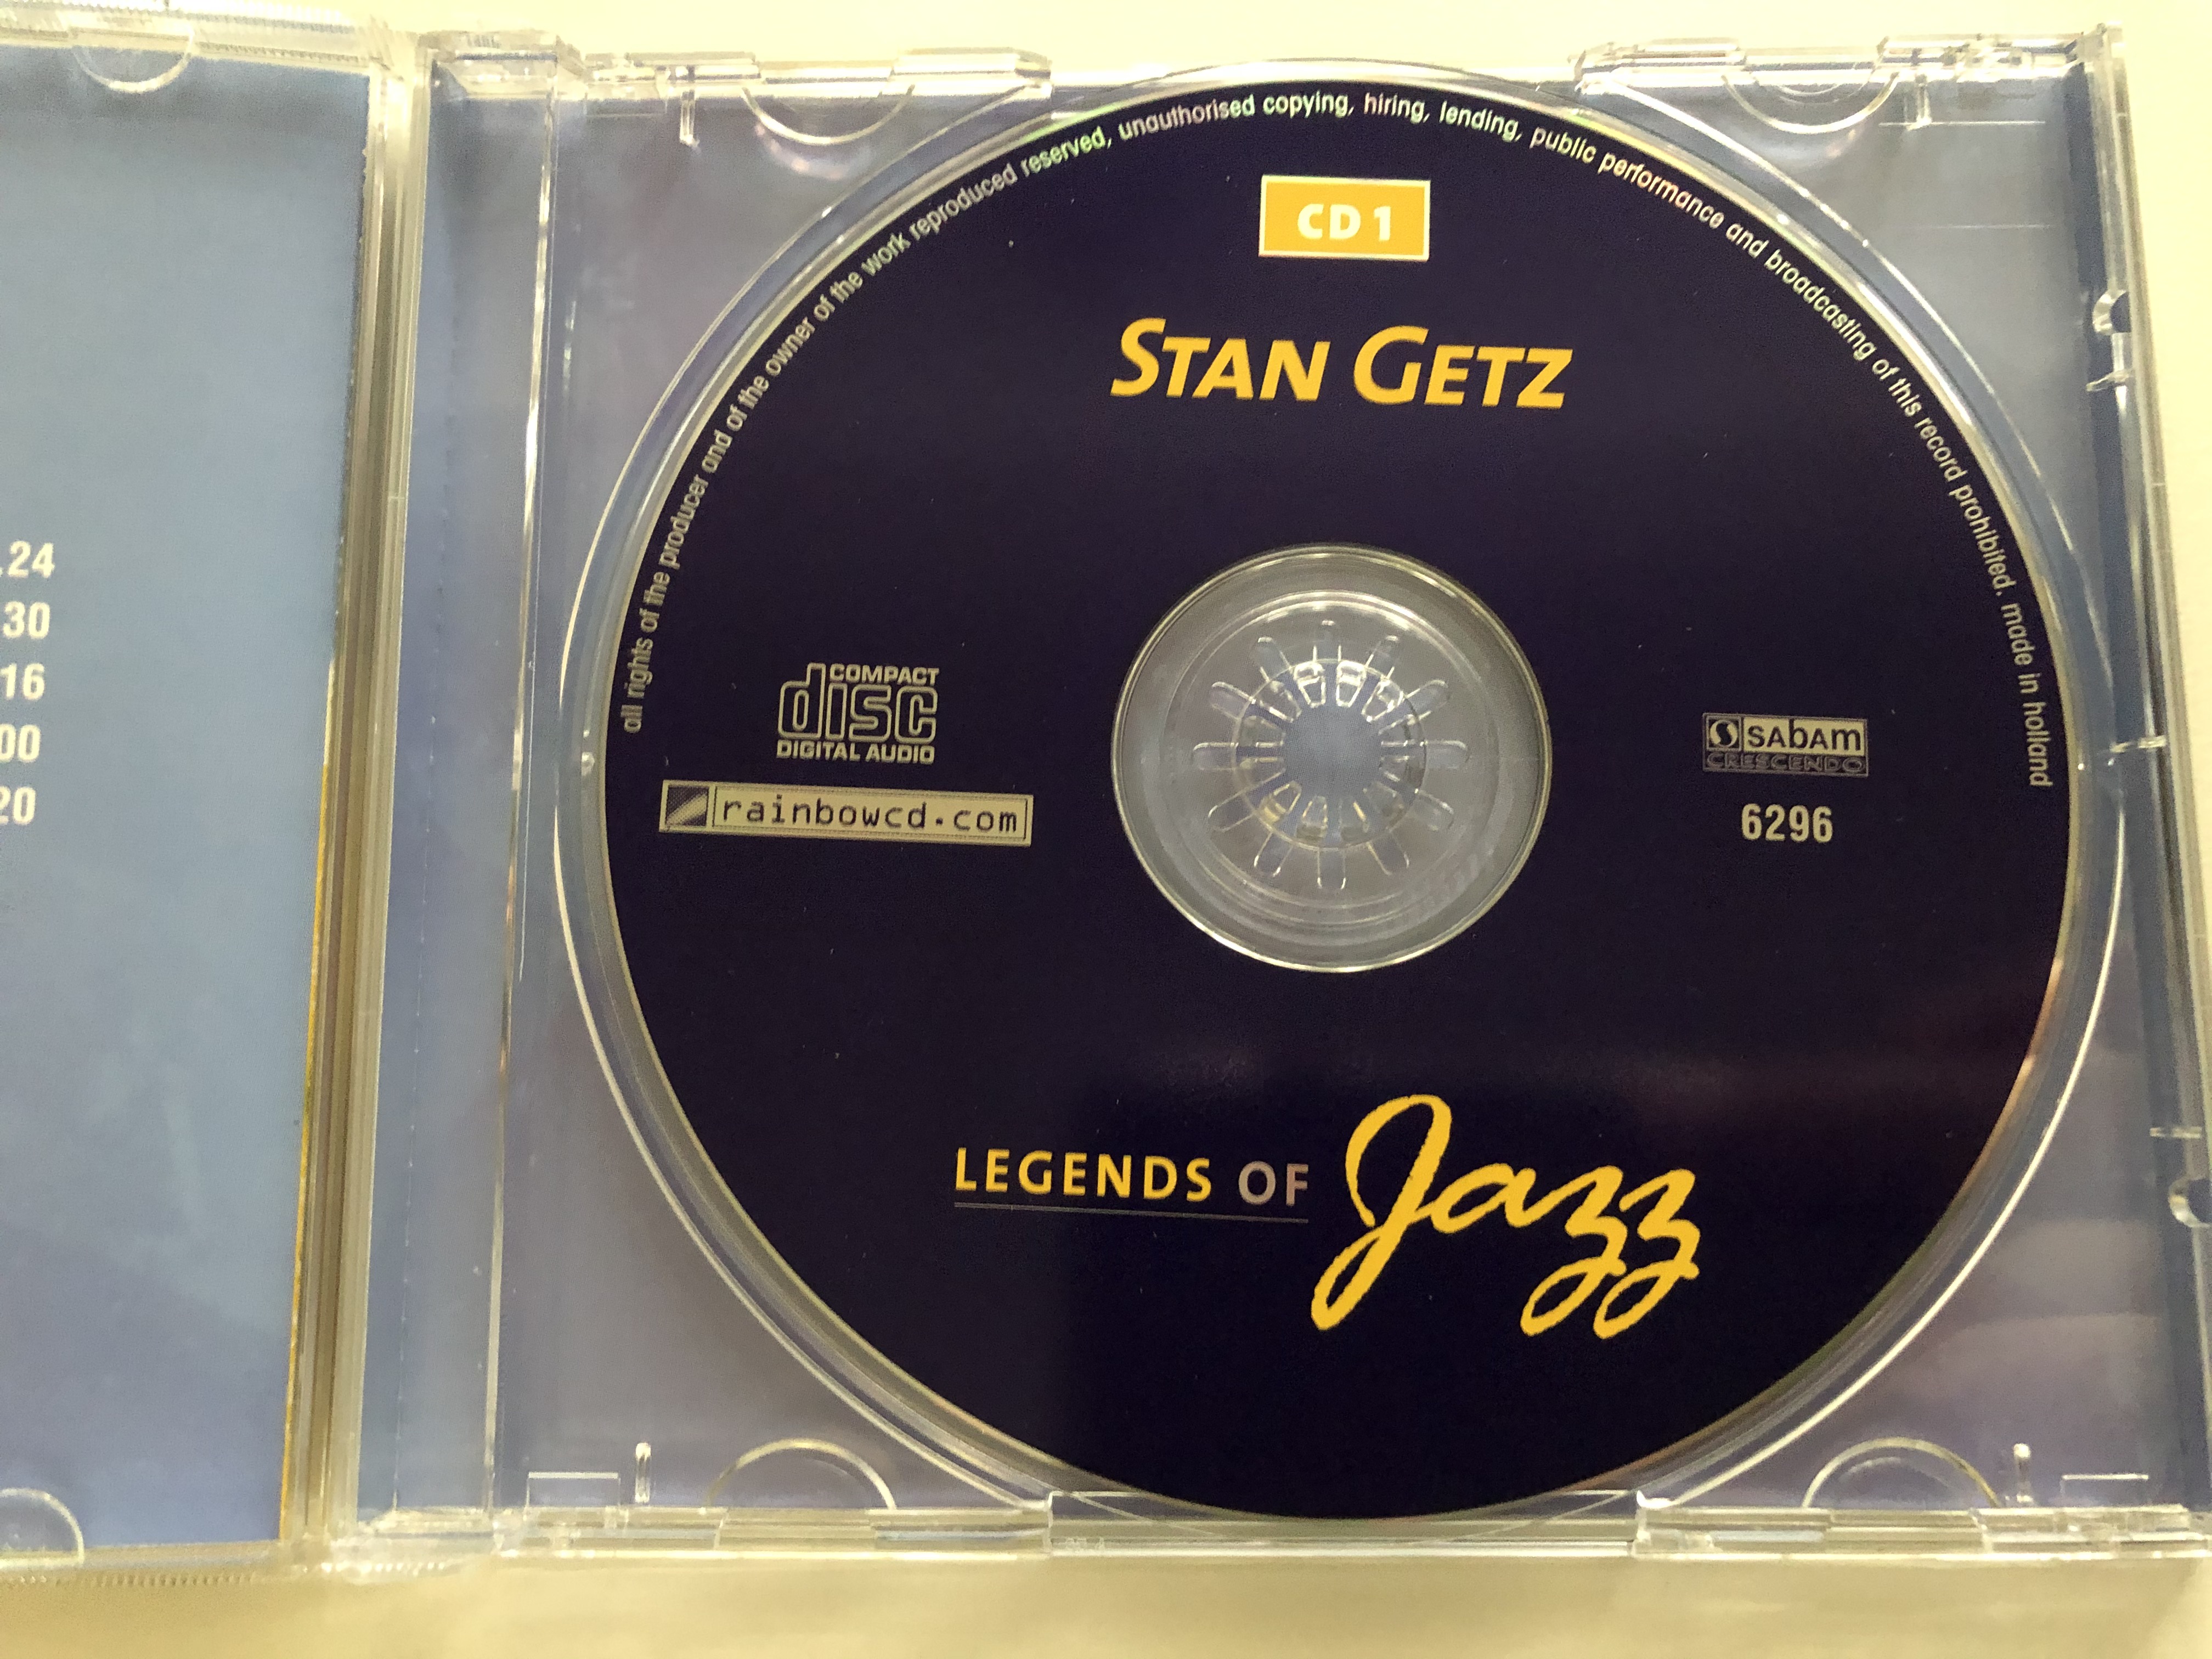 legends-of-jazz-stan-getz-cd-1-rainbowcd.com-audio-cd-6296-3-.jpg